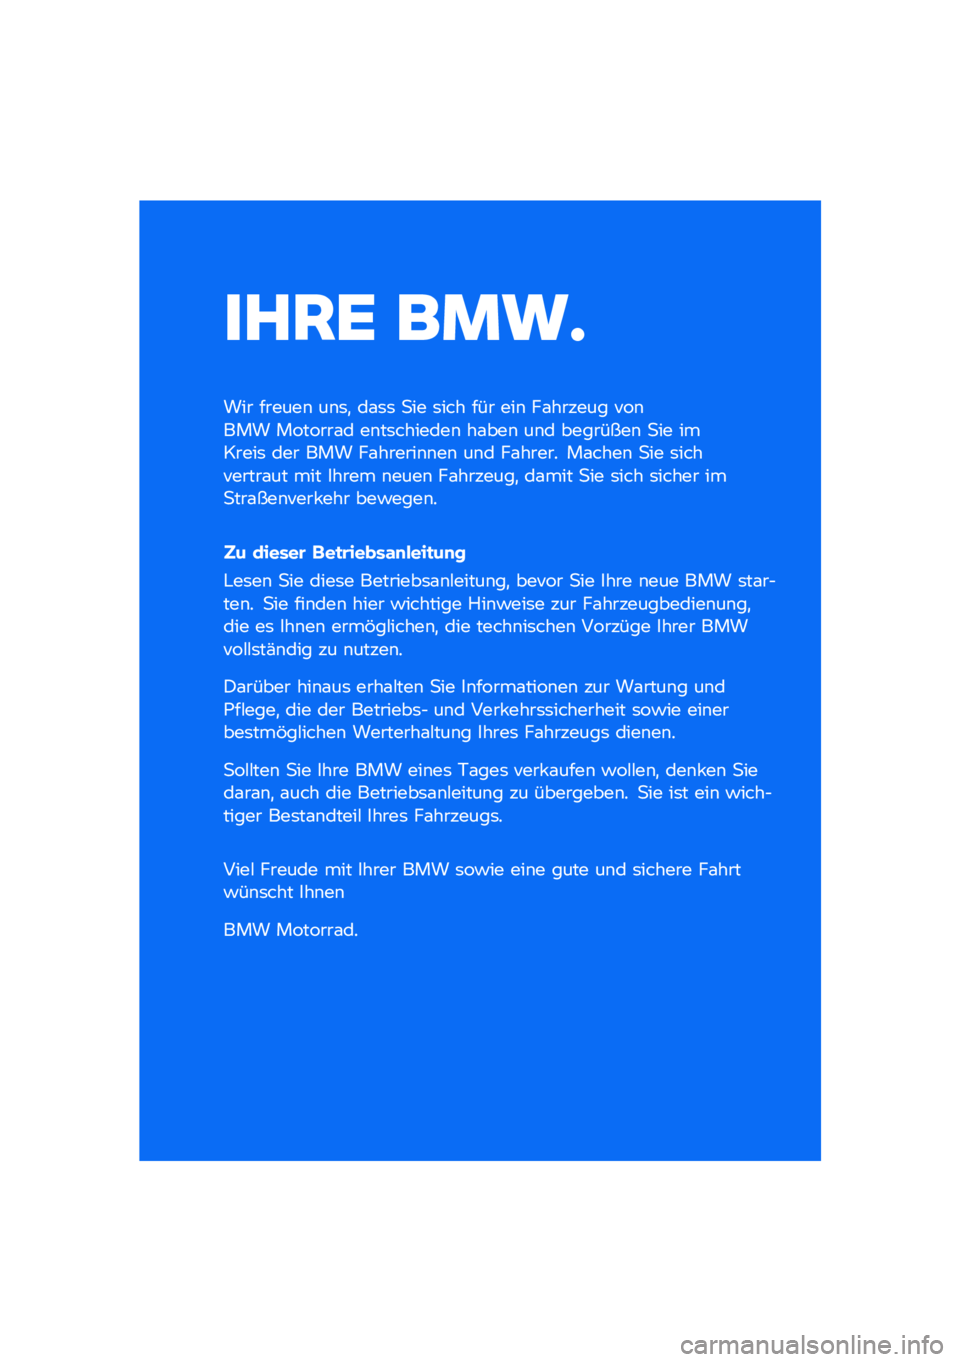 BMW MOTORRAD F 900 R 2021  Betriebsanleitung (in German) ���� ���\b�	
��� ������\b ��\b�	�
 ��\f�	�	 �
�� �	��� ��� ���\b ��\f������ ���\b��� �������\f� ��\b��	�������\b ��\f���\b ��\b� �������